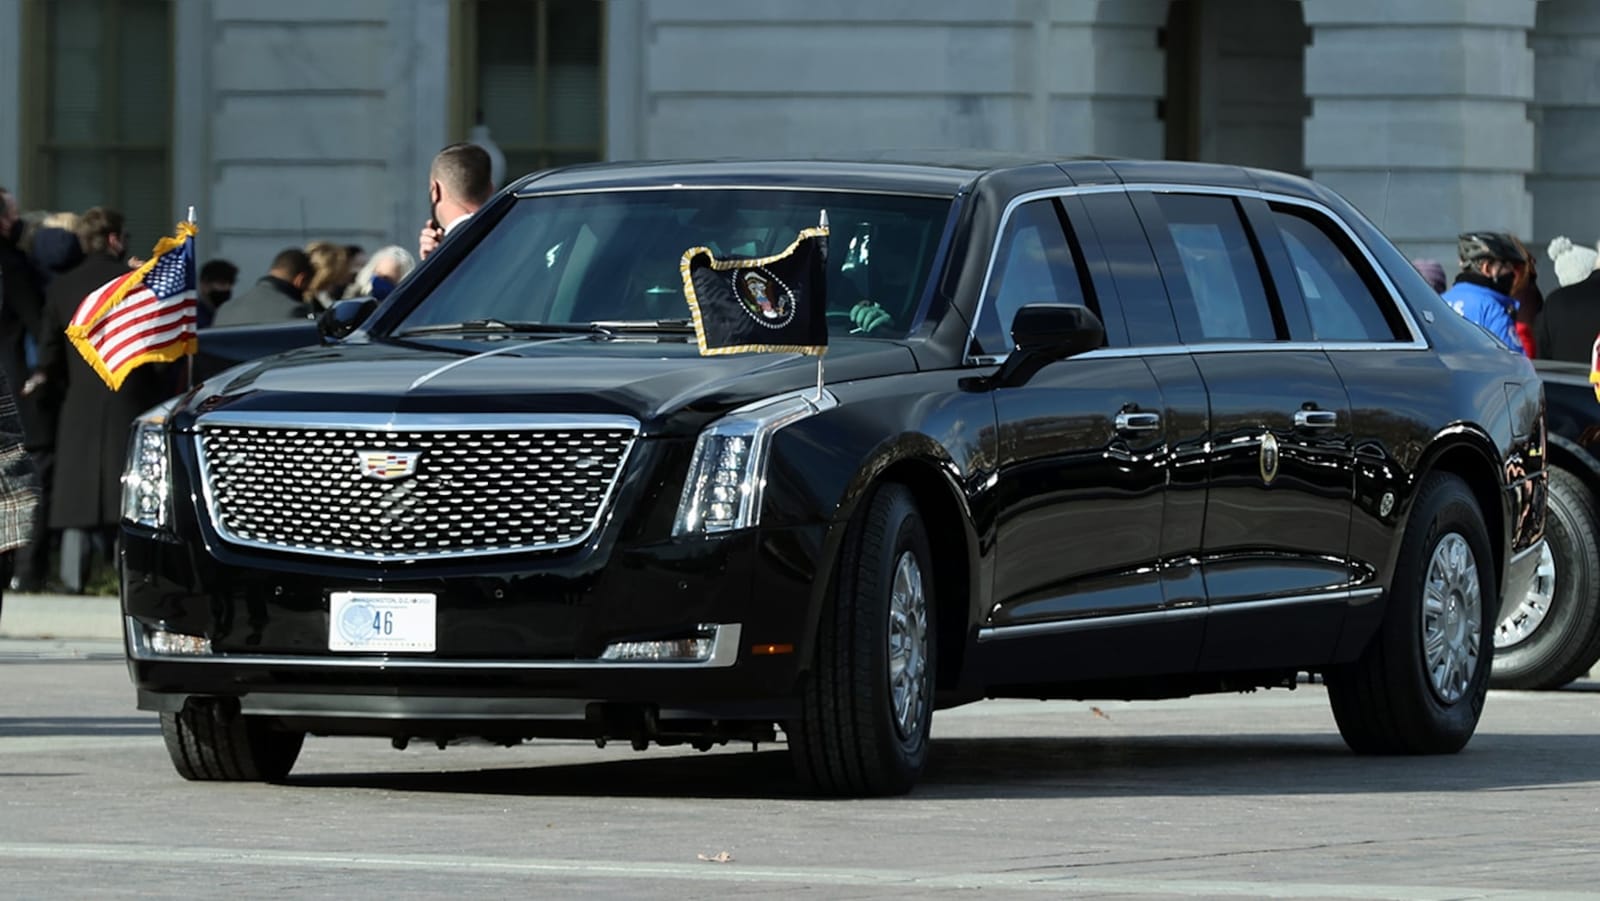 Take A look At US President Joe Biden’s Official Car, The Beast